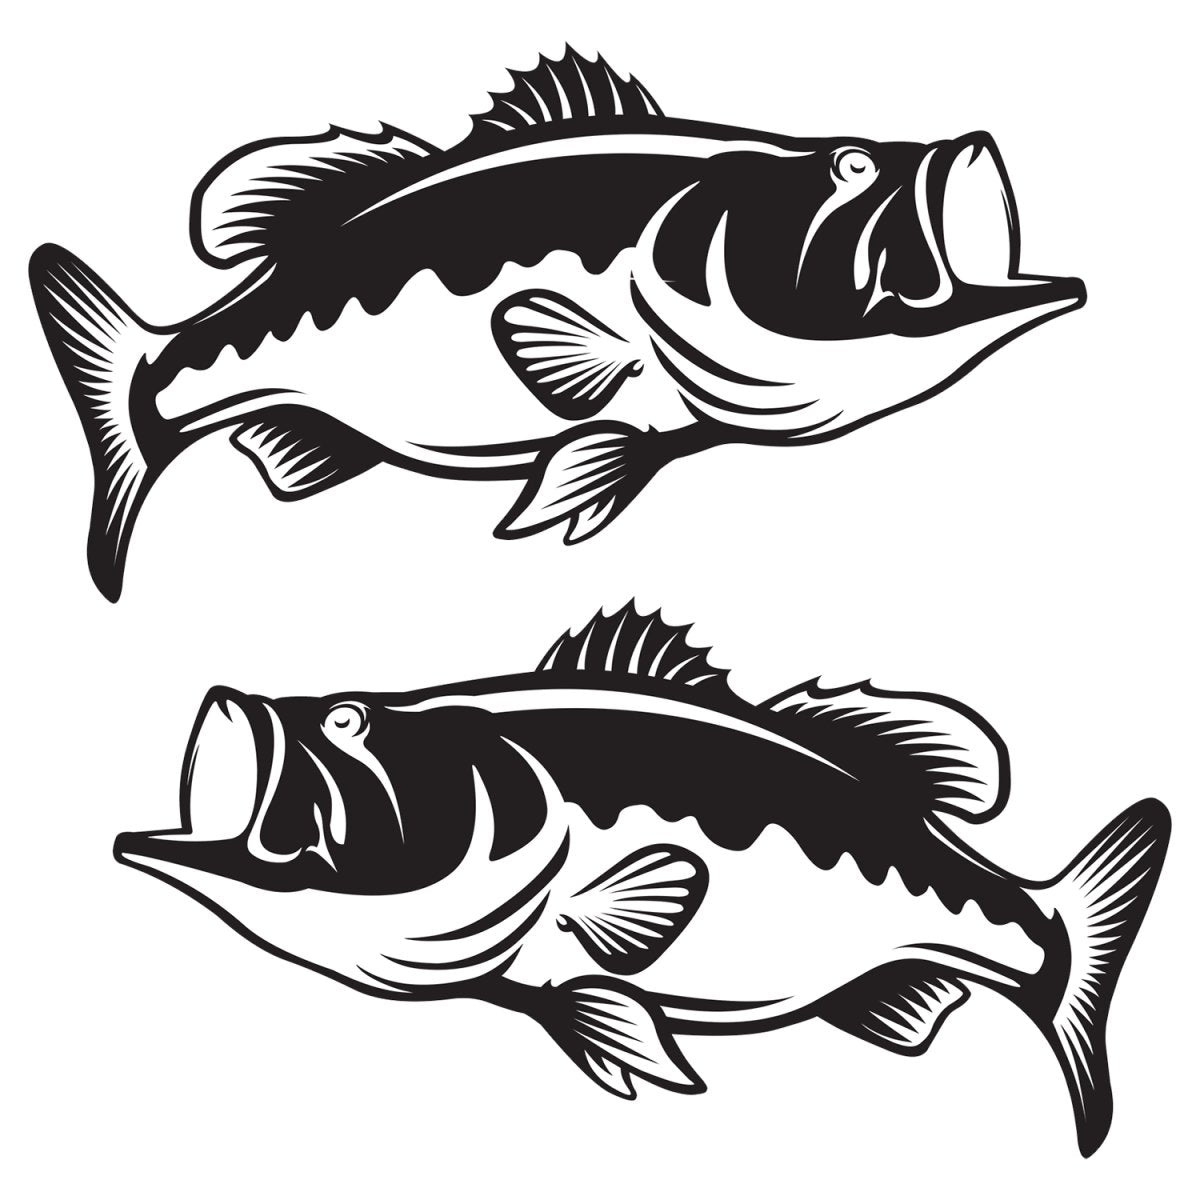 bass fish clip art black and white